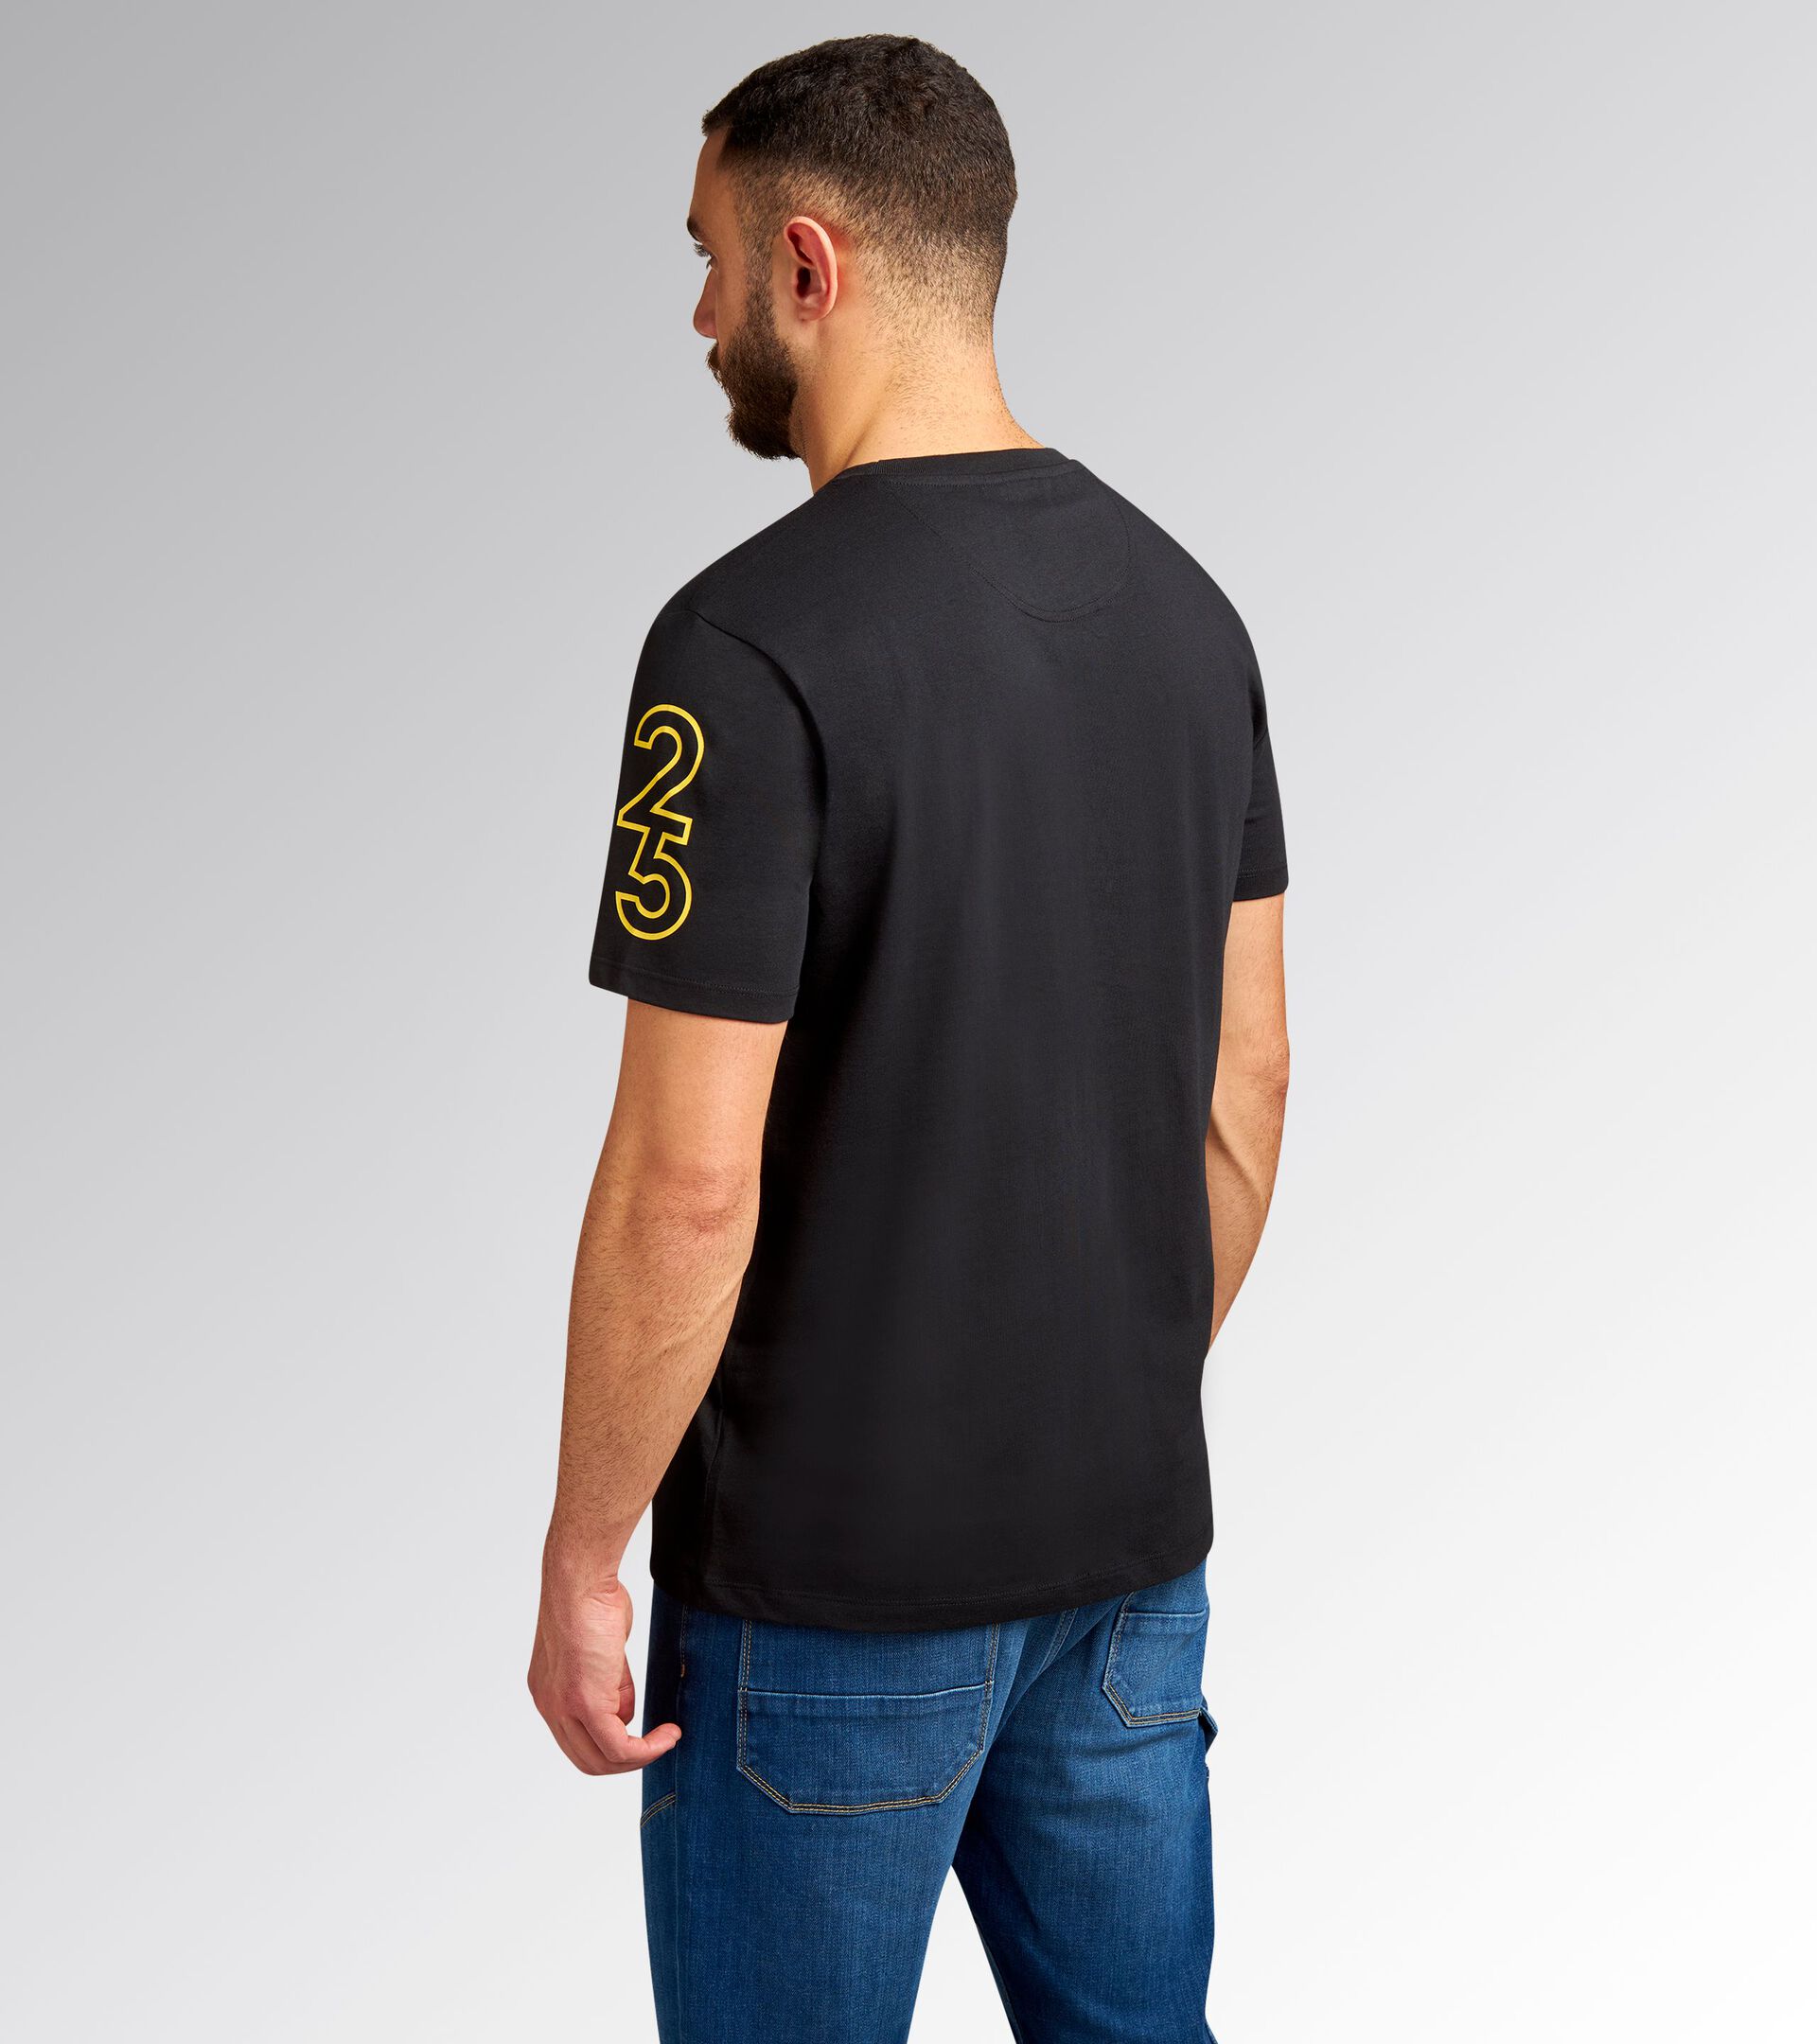 Short-sleeved T-shirt T-SHIRT VENTICINQUESIMO BLACK - Utility